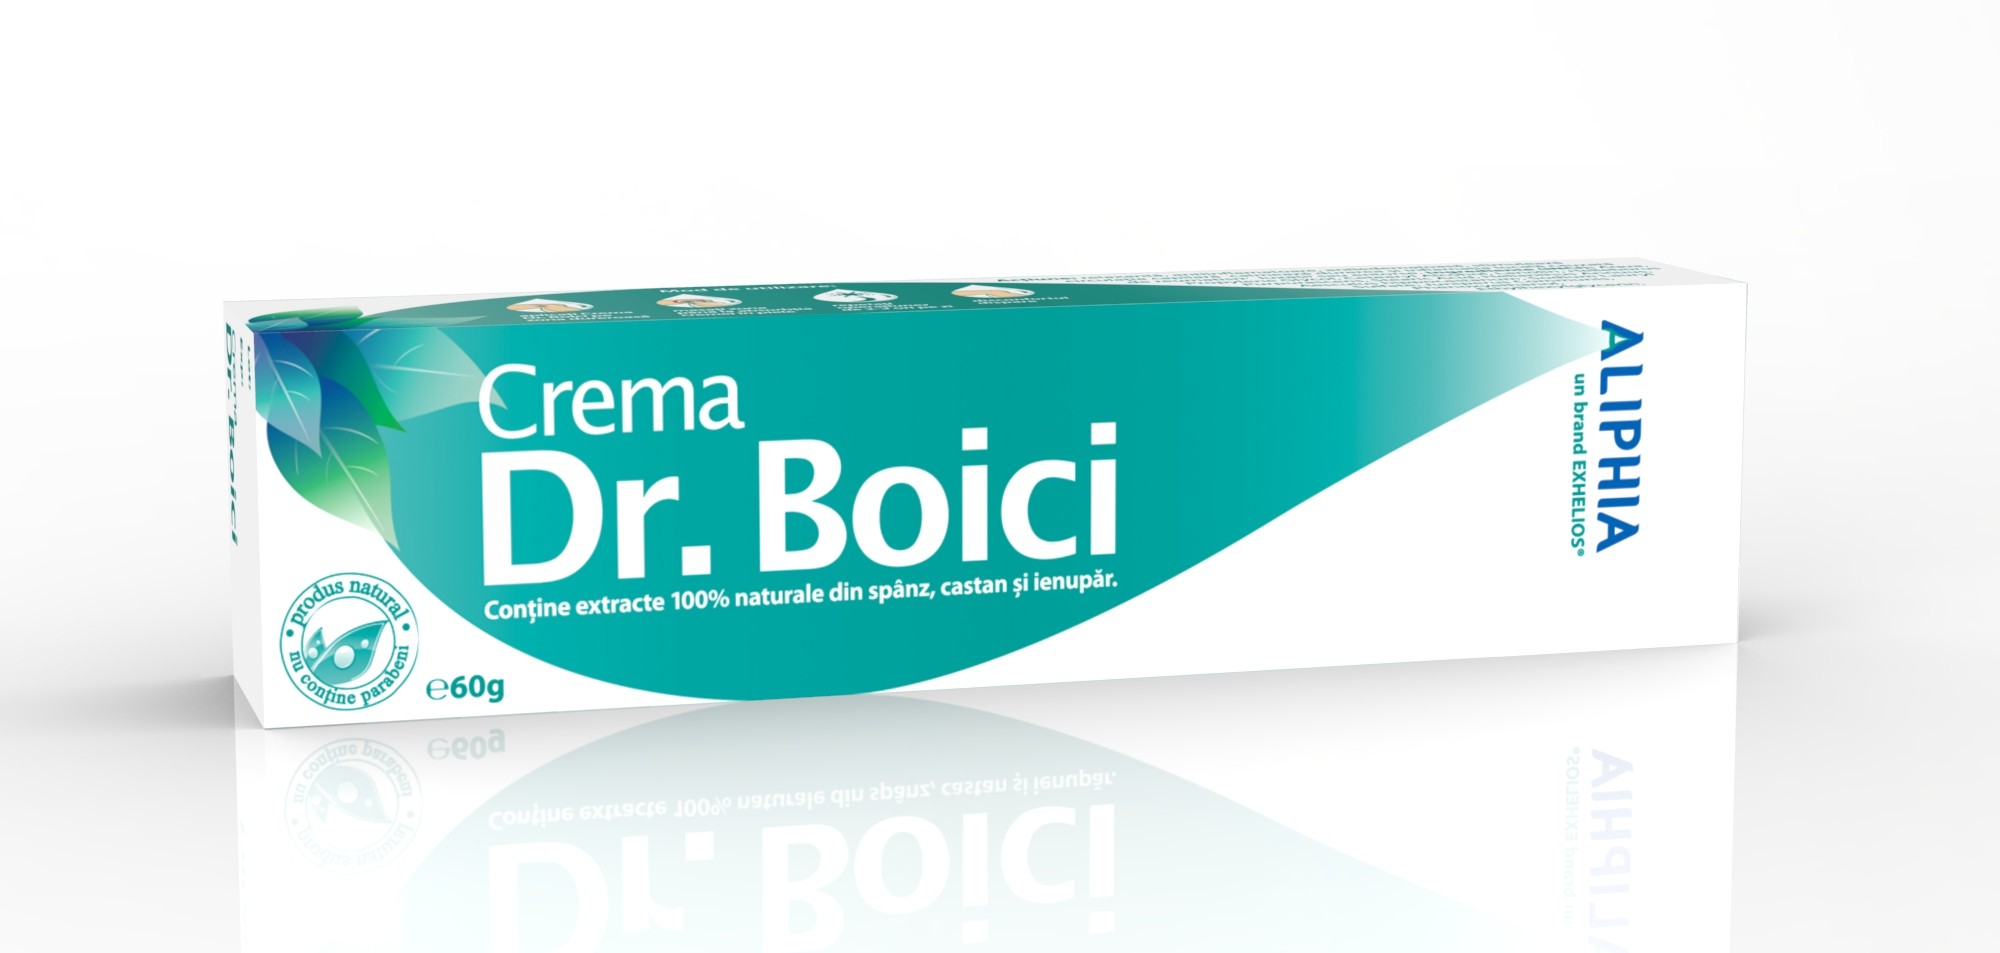 Crema Dr Boici (boicil) 60g - Aliphia Exhelios